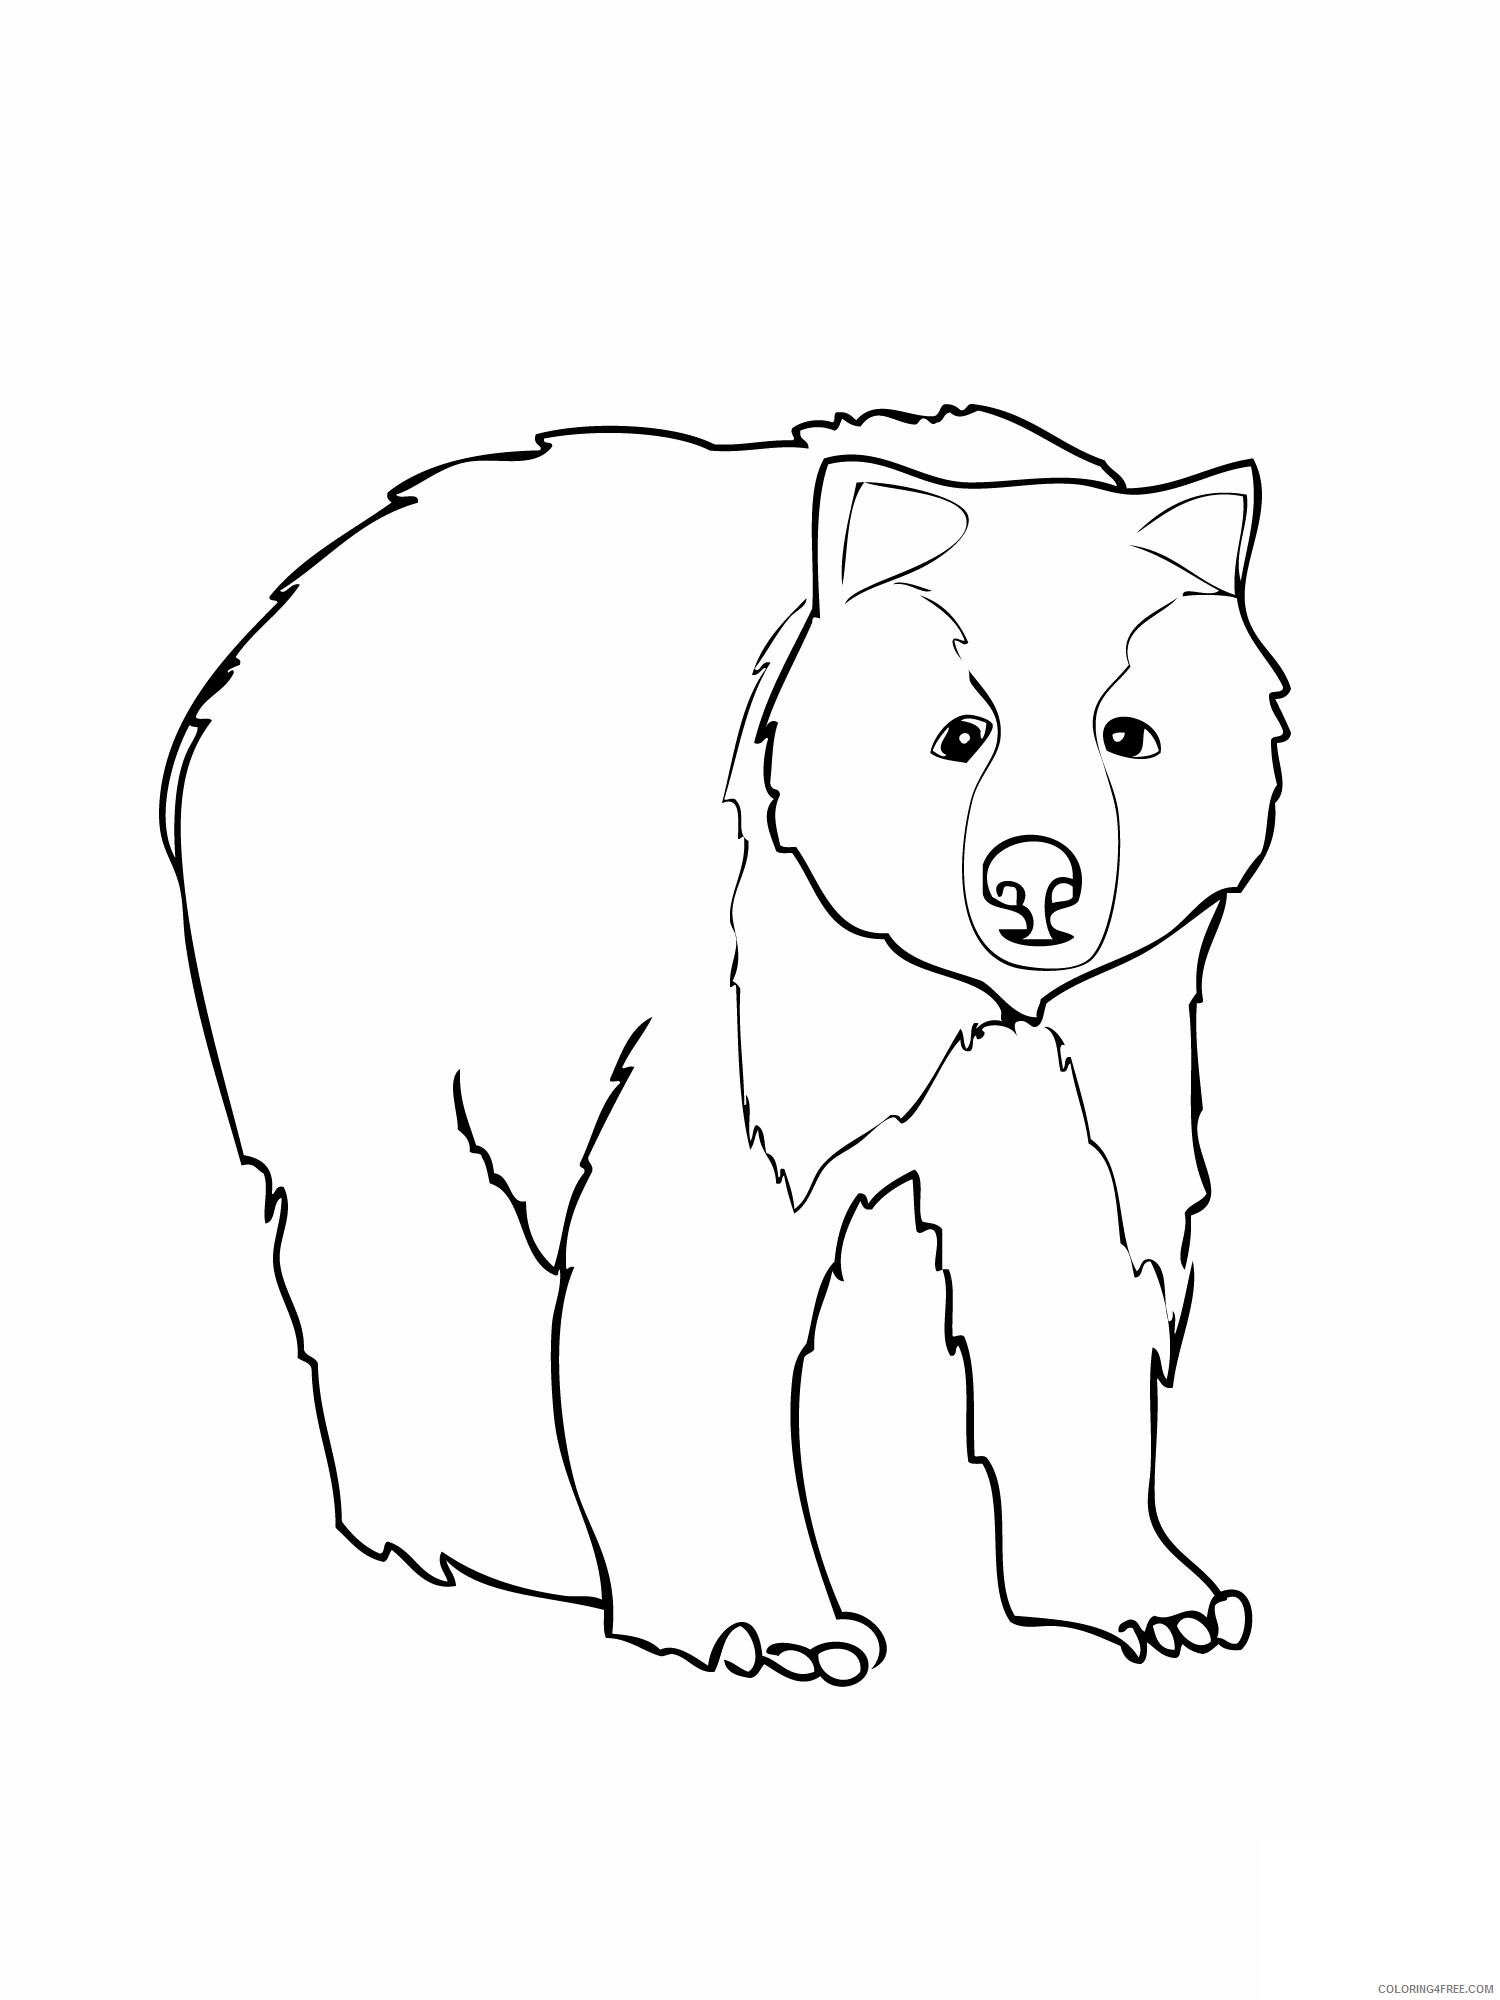 Bear Coloring Pages Animal Printable Sheets Bear 2021 0263 Coloring4free